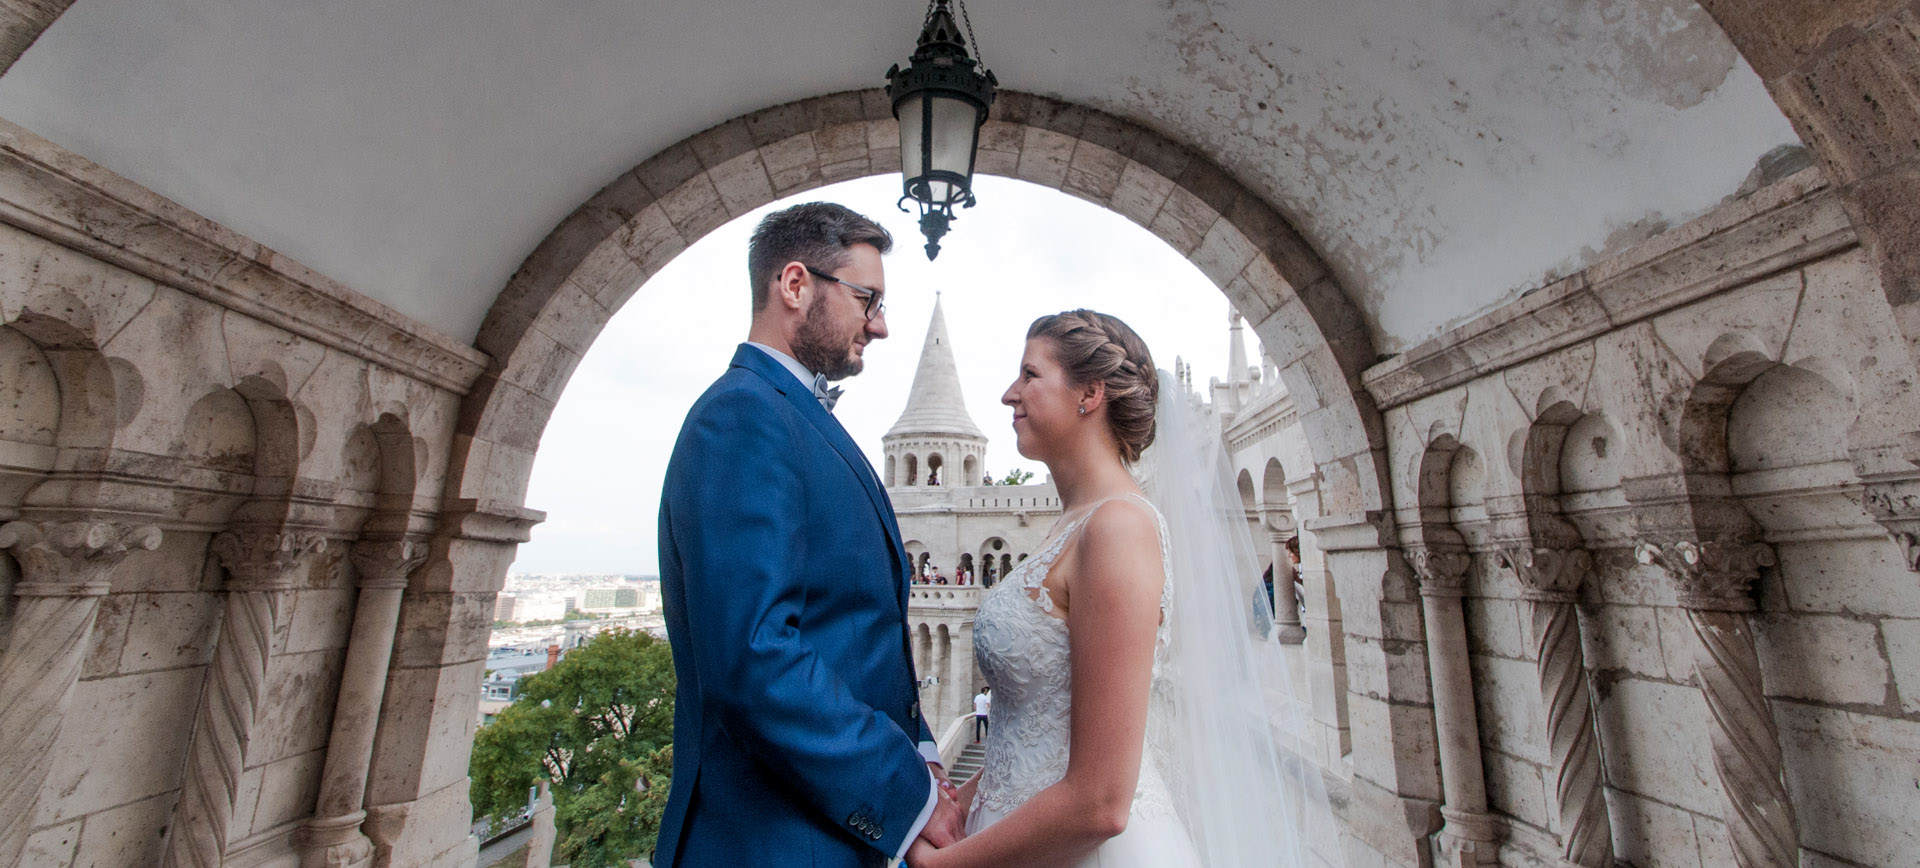 Budapest adventure wedding and honeymoon choice